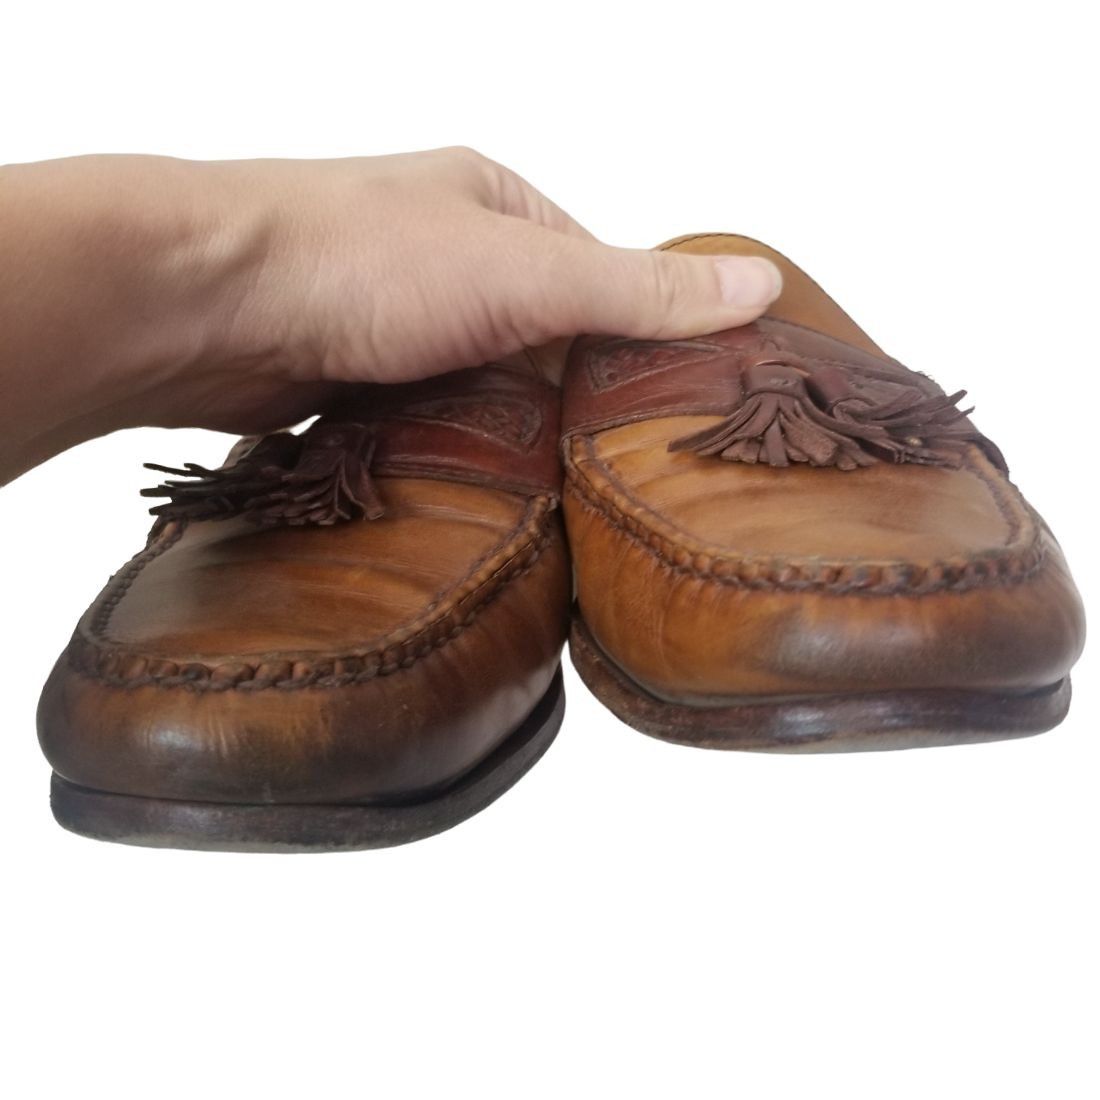 Allen Edmonds Allen Edmonds Leather Closed Toe Slip On Maxfield Loafers Size US 12 / EU 45 - 4 Thumbnail